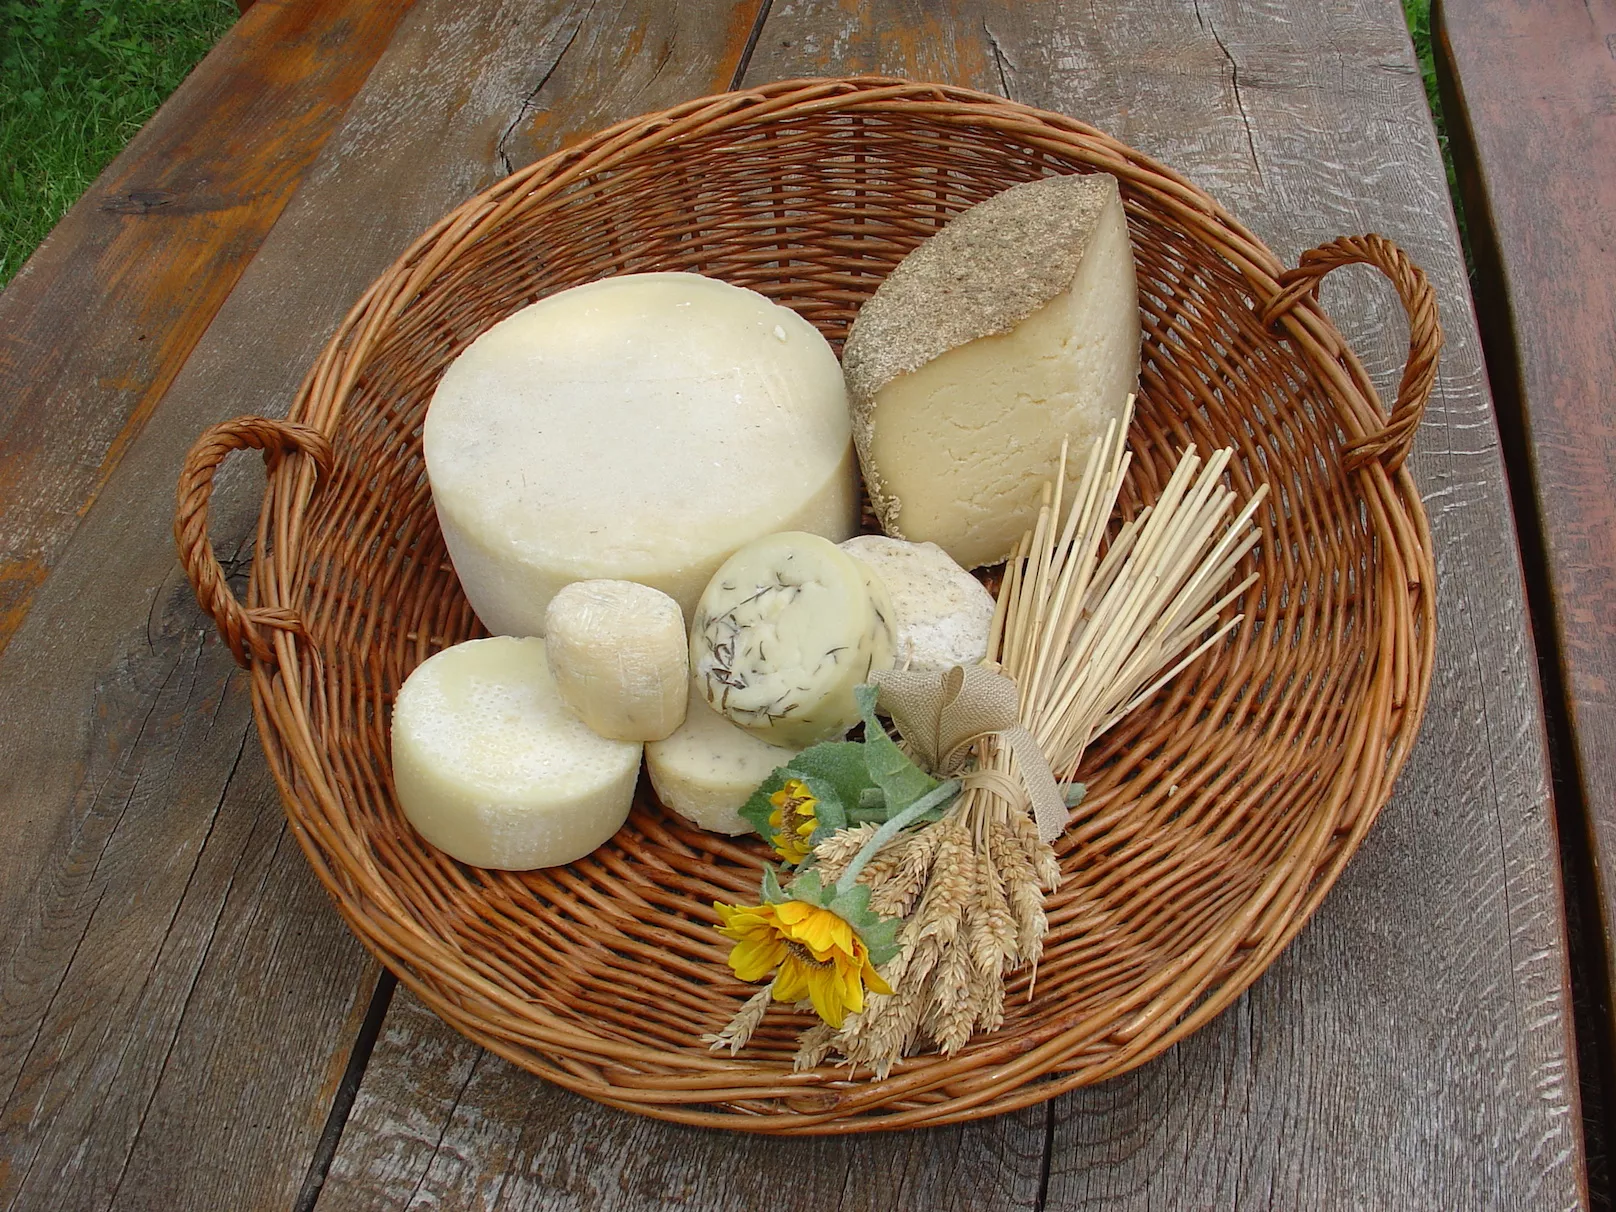 Zidaric Caseificio in Italy, Europe | Cheesemakers - Rated 0.9